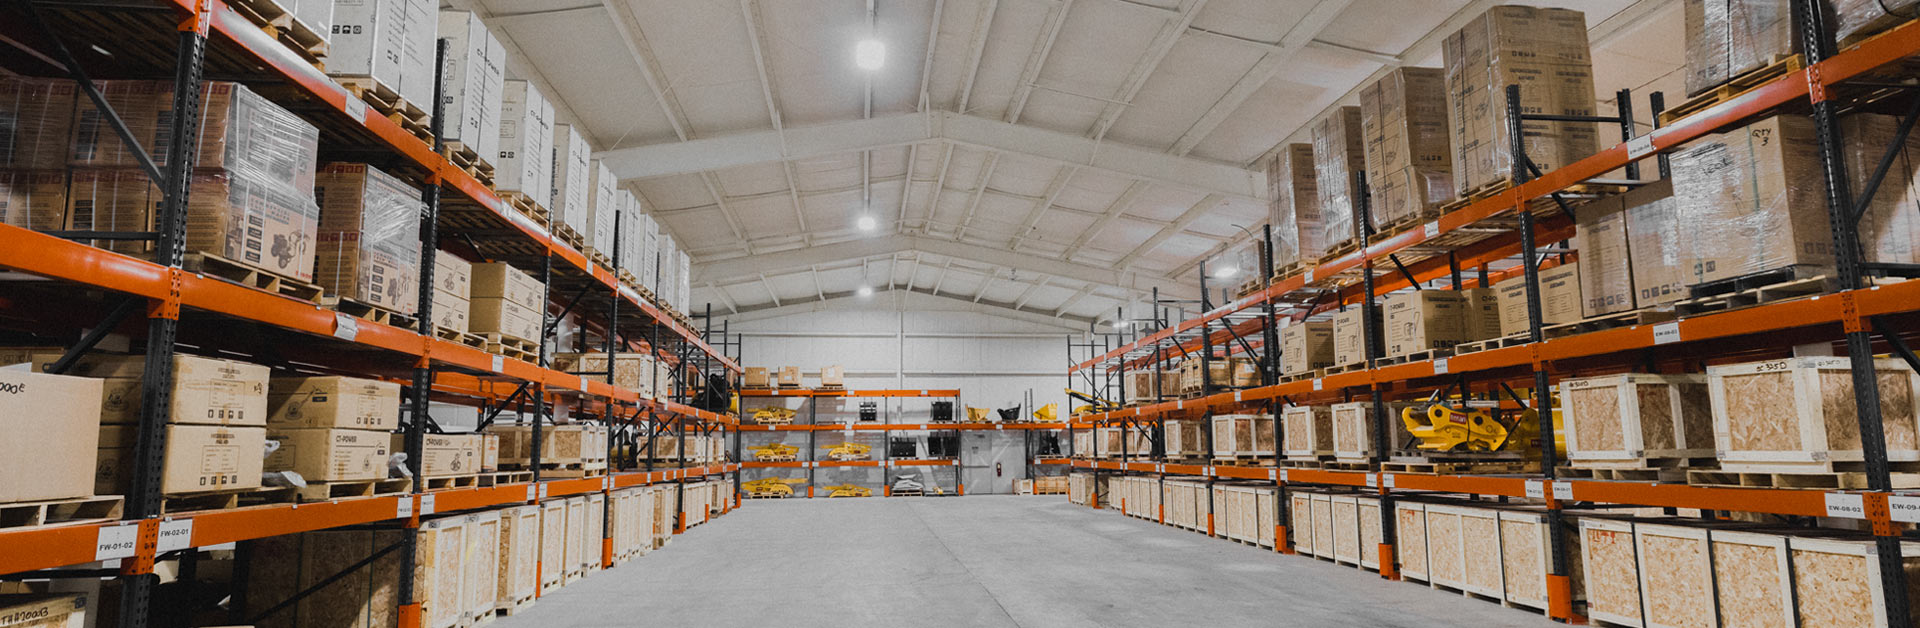 Teran-warehouse